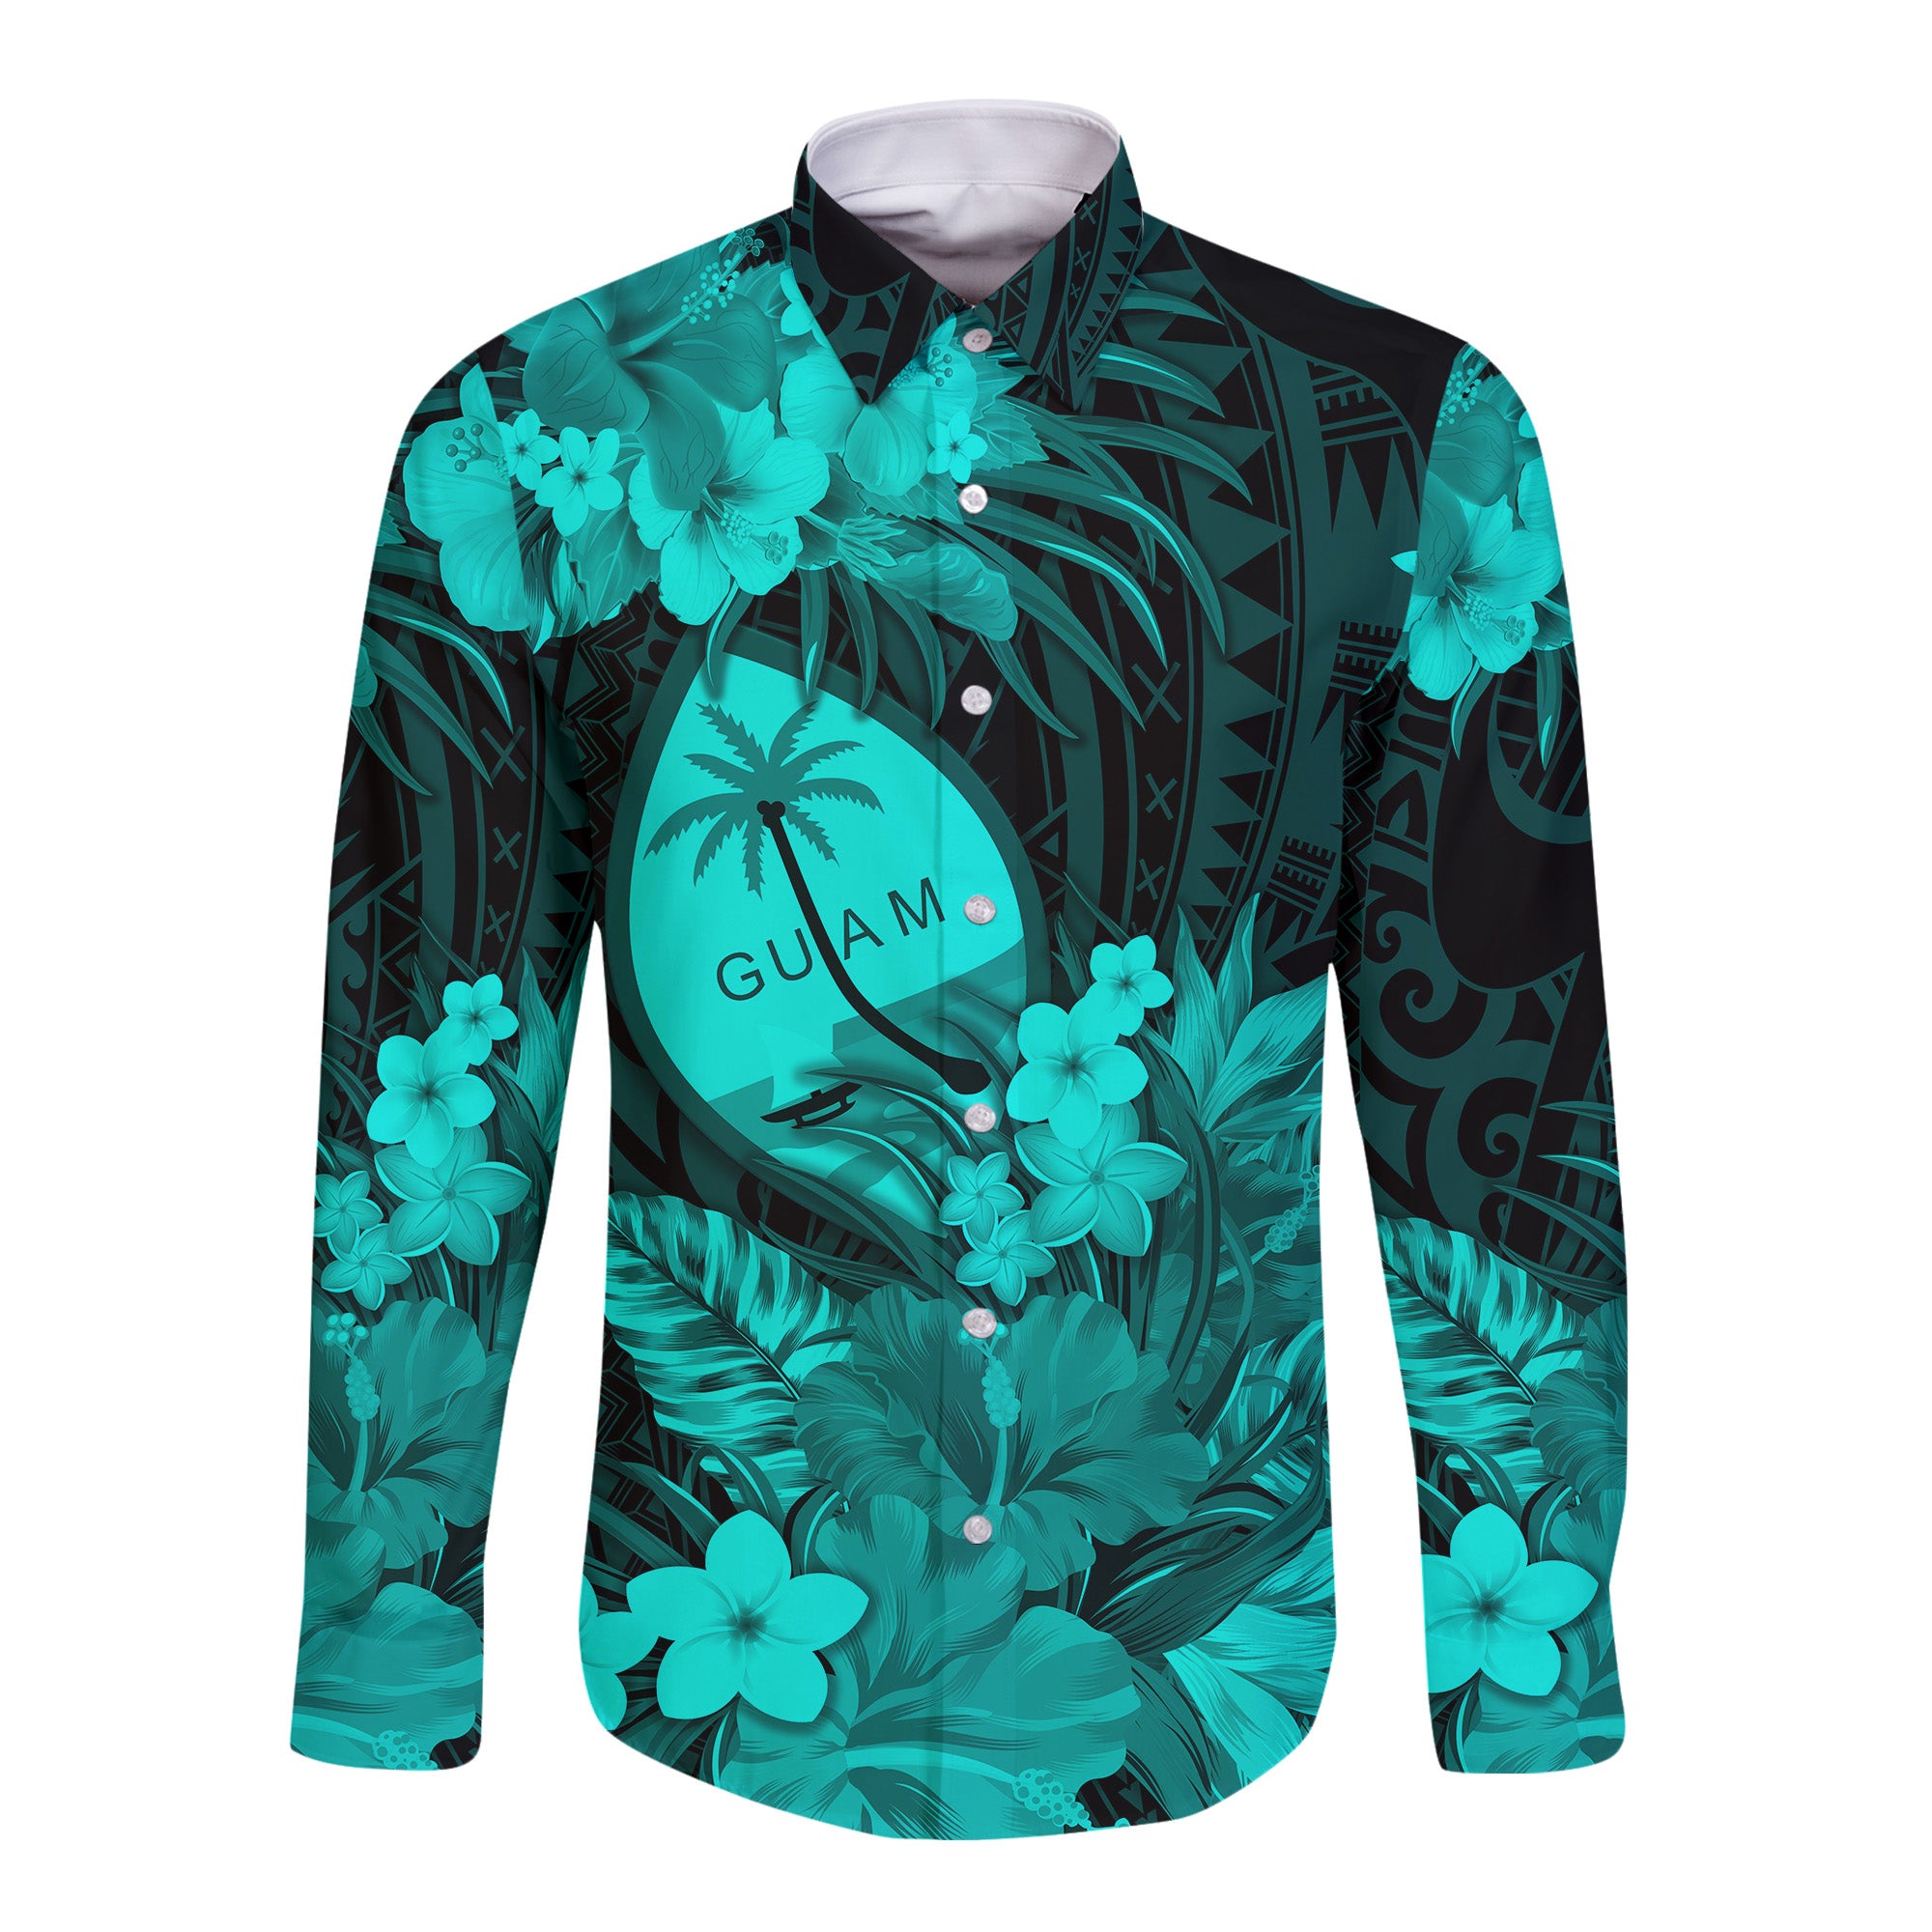 (Custom Personalised) Guam Polynesian Hawaii Long Sleeve Button Shirt Tropical Flowers - Turquoise LT8 - Polynesian Pride